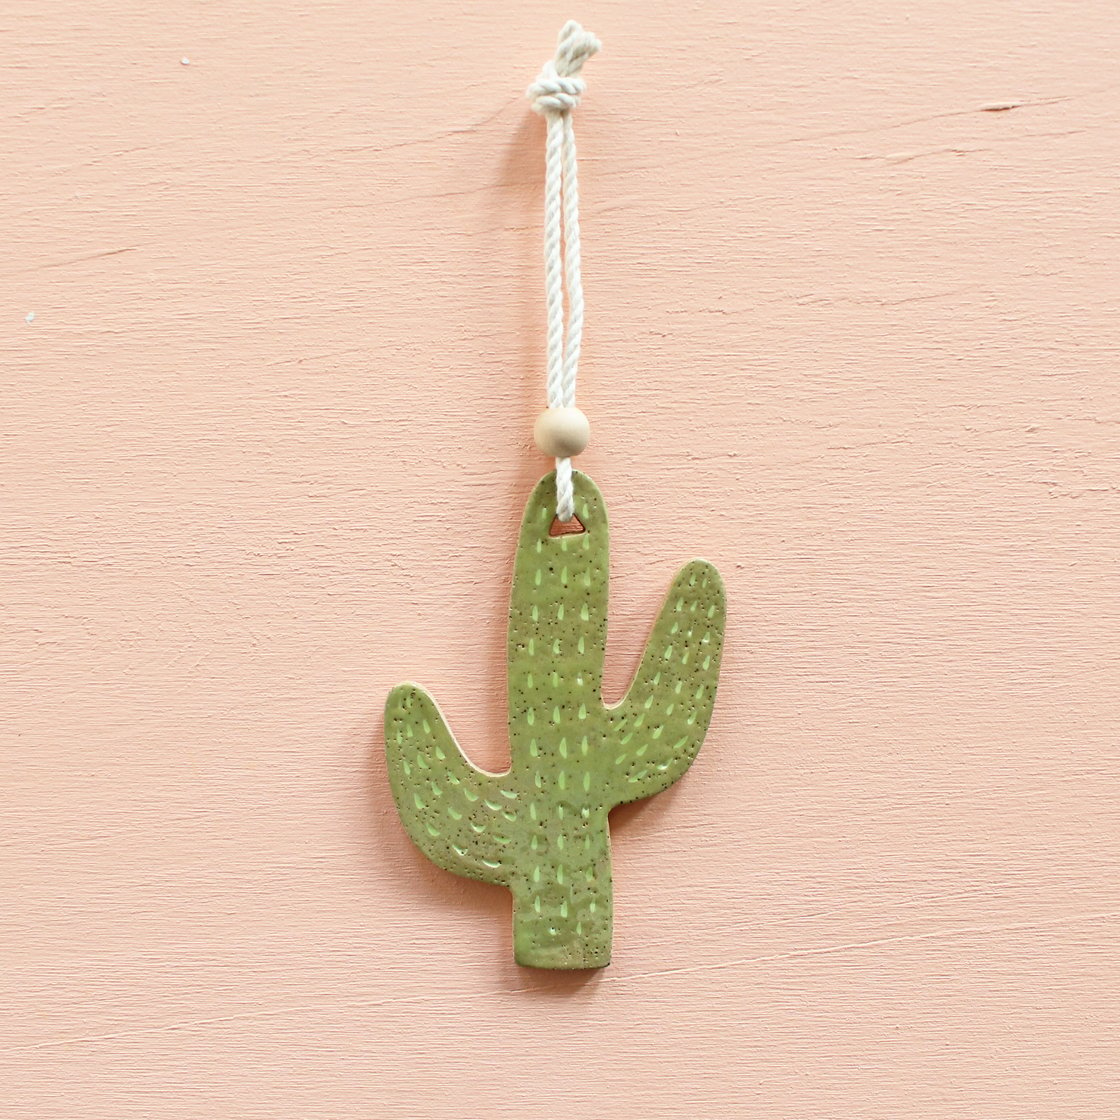 Image of Cactus Ornament - Janelle Gramling 